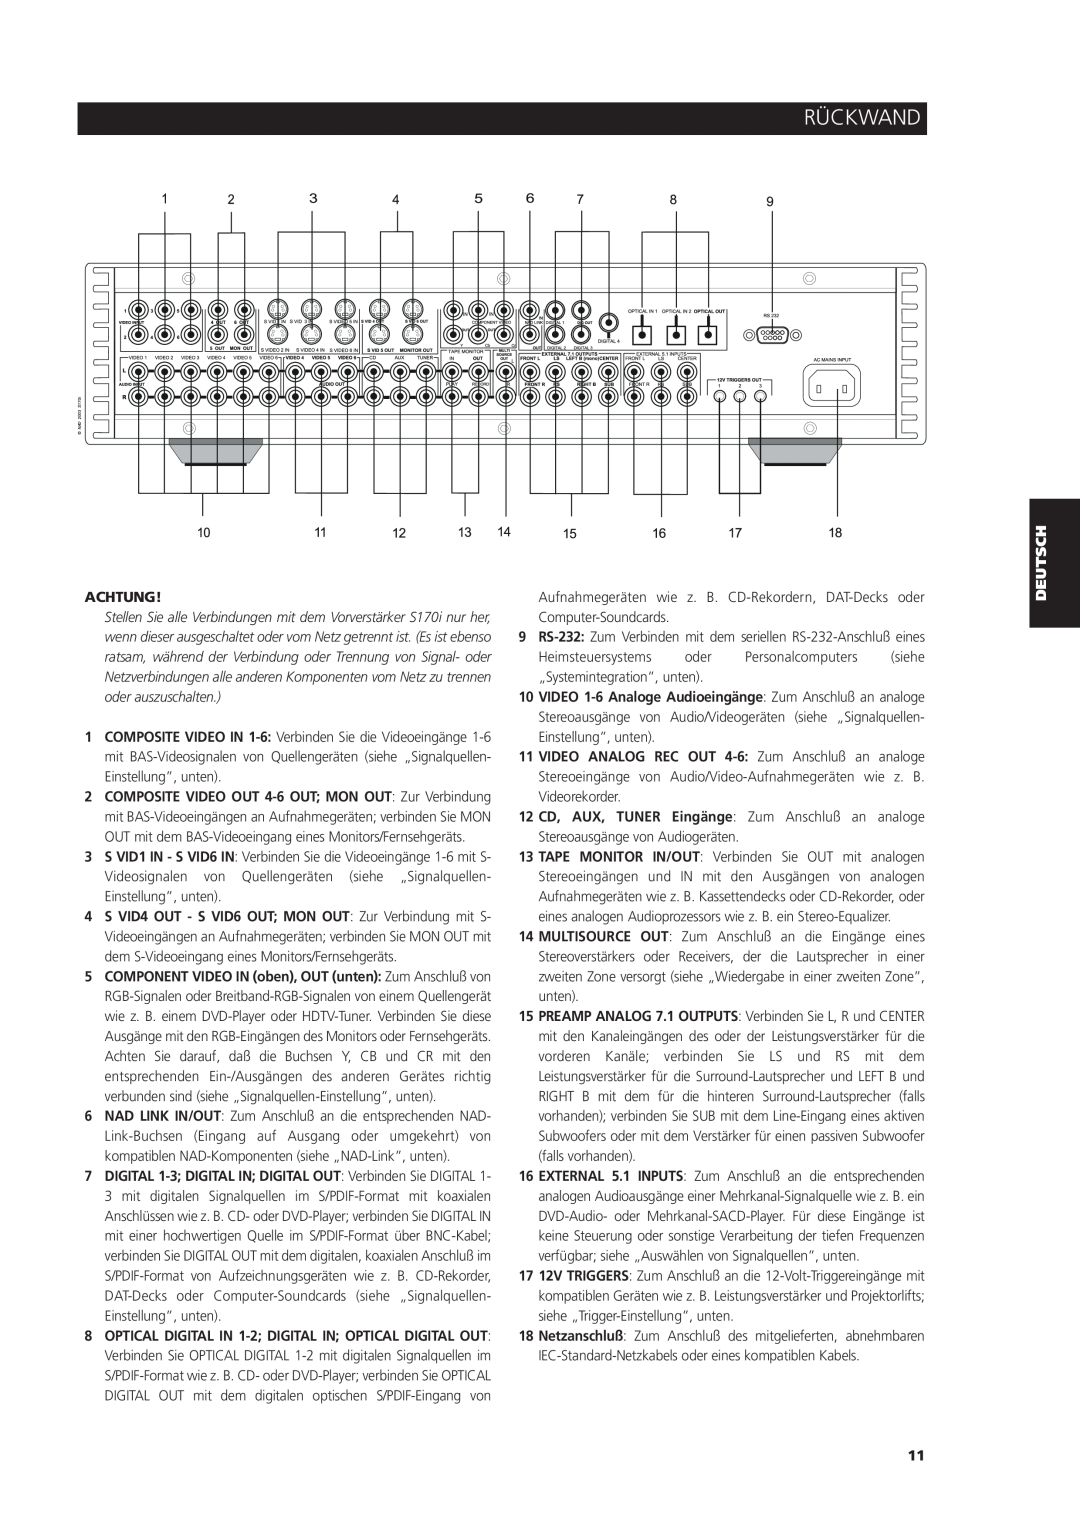 NAD S170iAV owner manual Rückwand, Achtung 